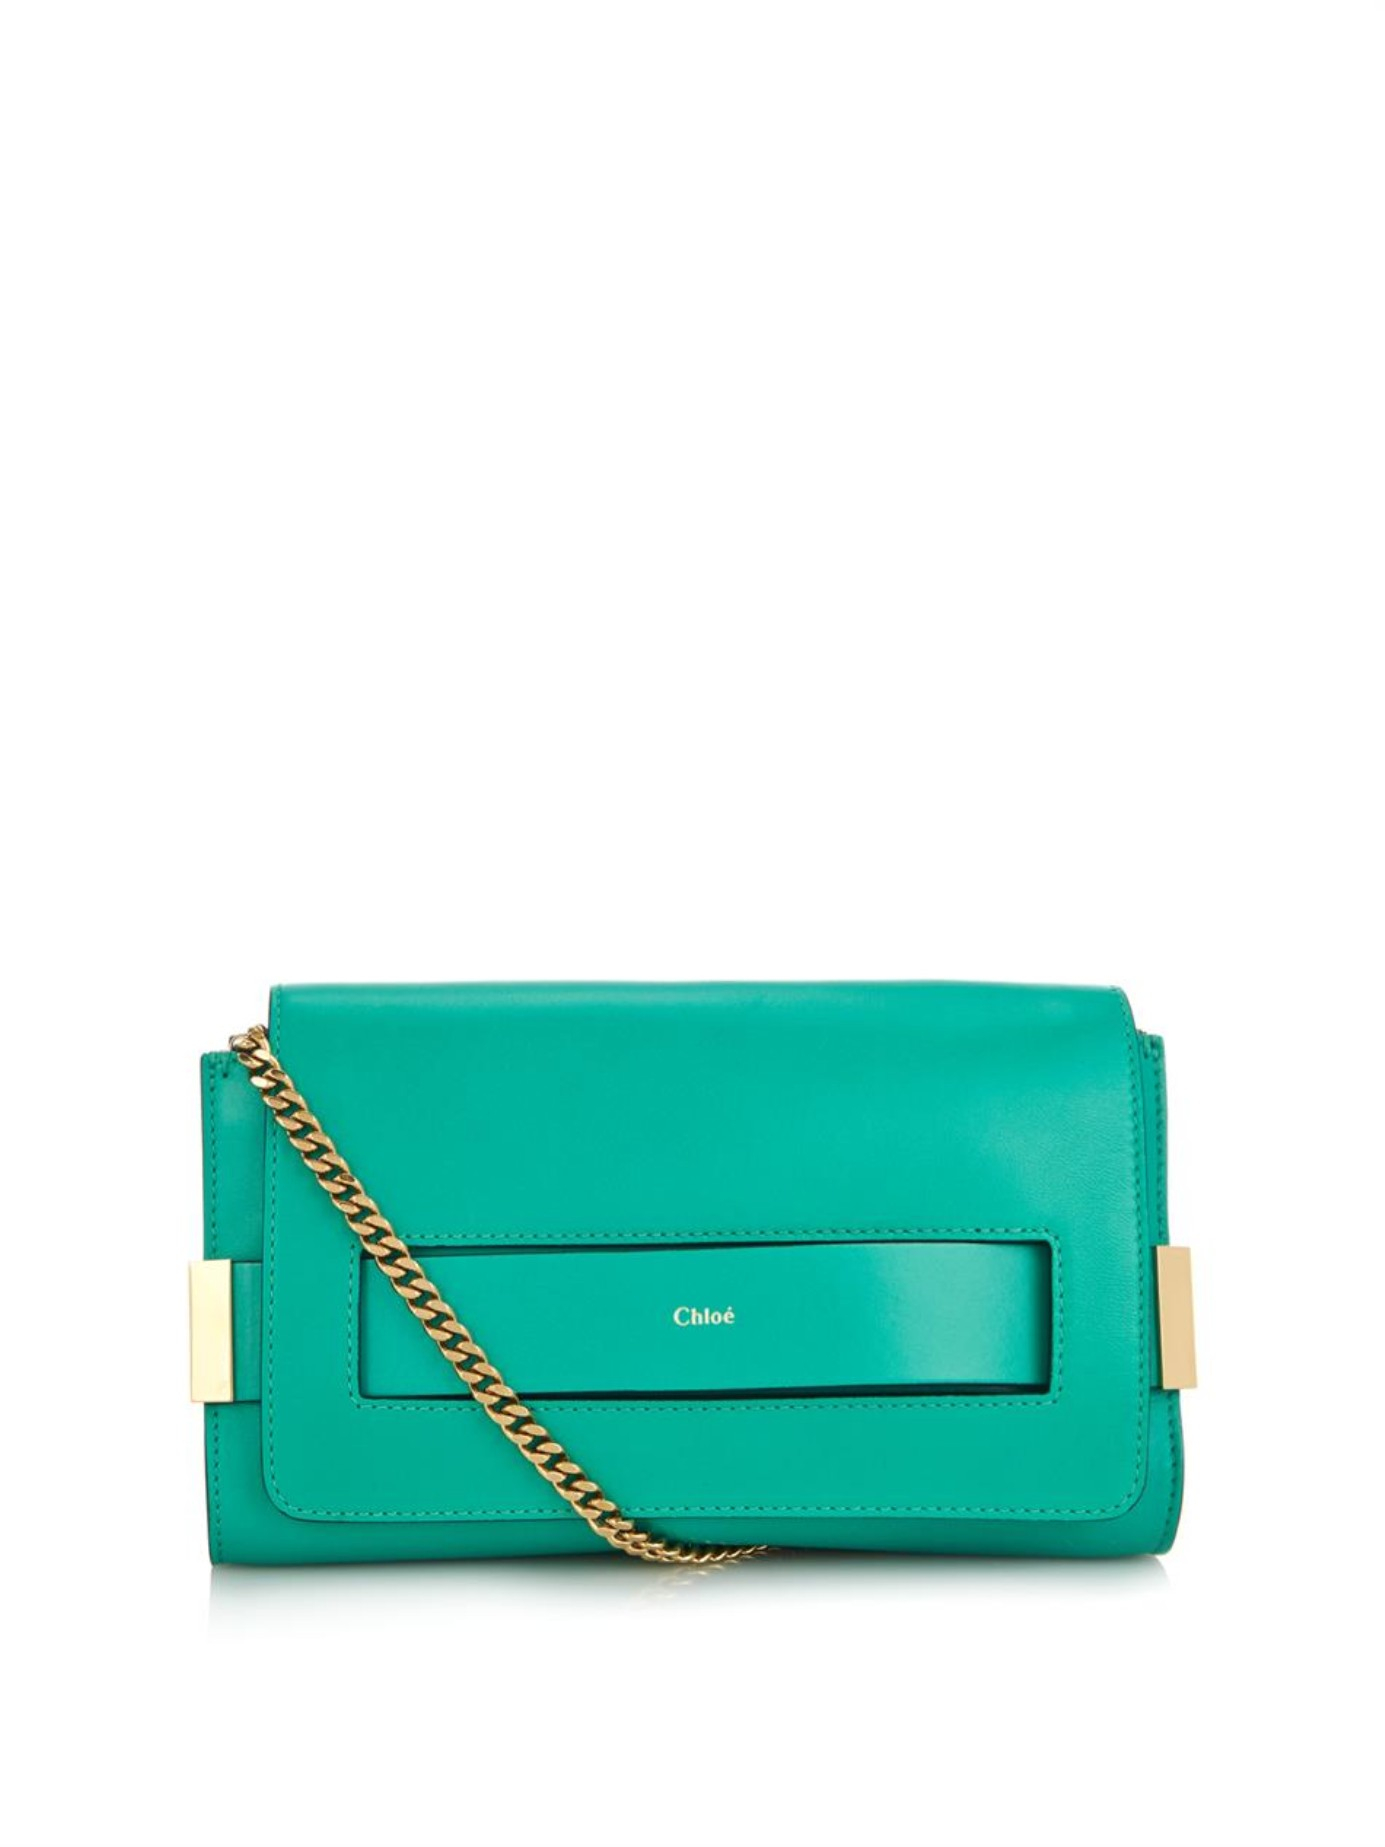 Chlo Elle Medium Leather Shoulder Bag in Green (Bright) | Lyst